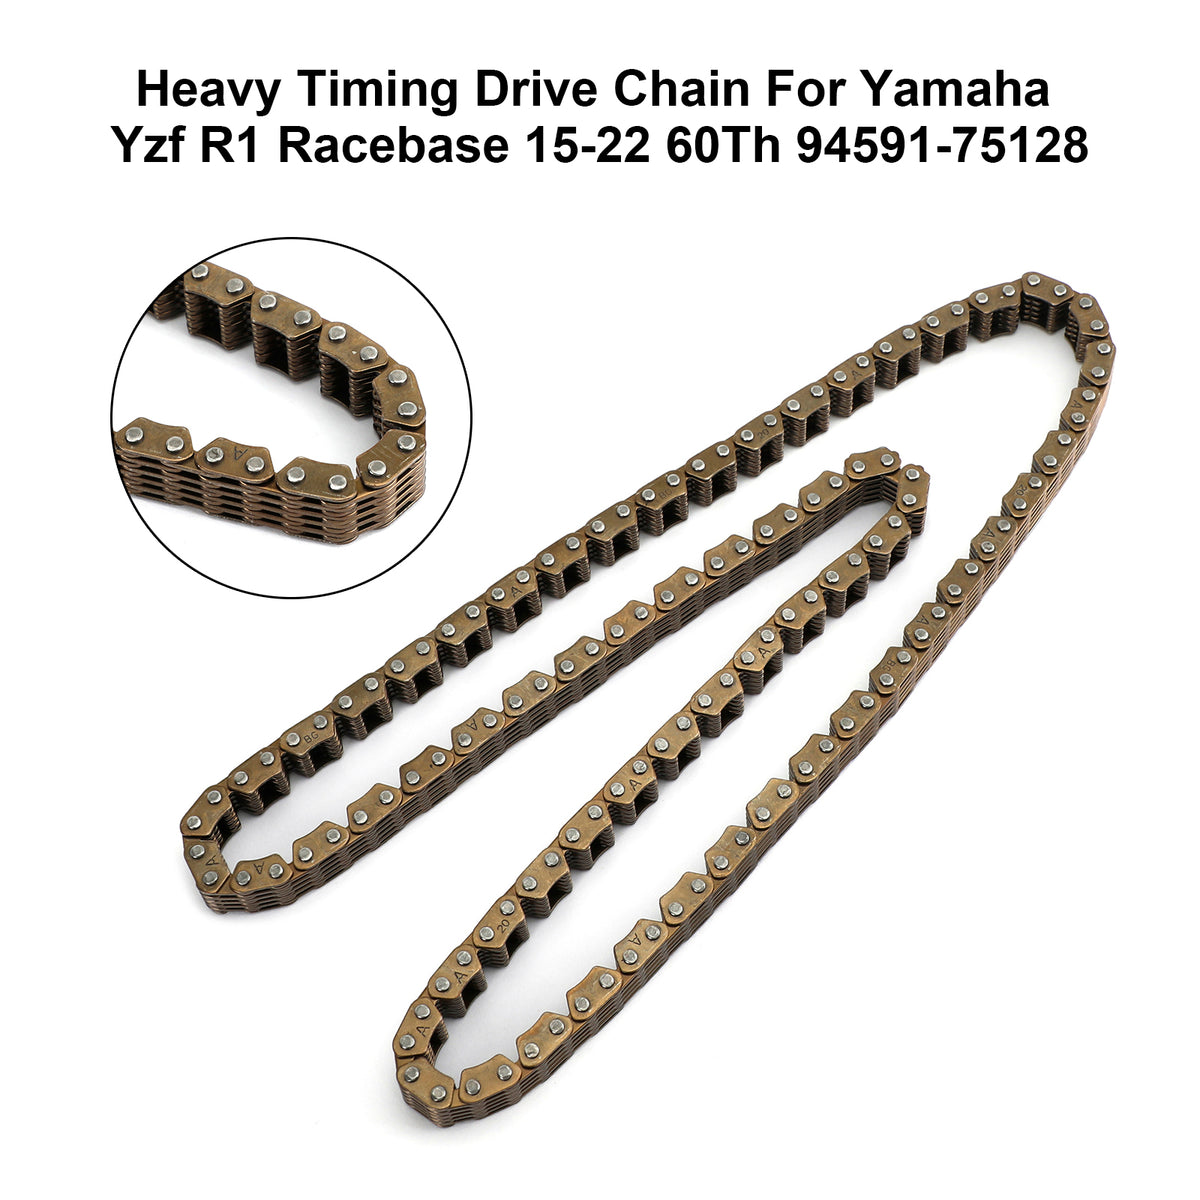 New Heavy Duty Drive Chain For Yamaha Yzf R1 Racebase 15-22 60Th 94591-75128 Generic